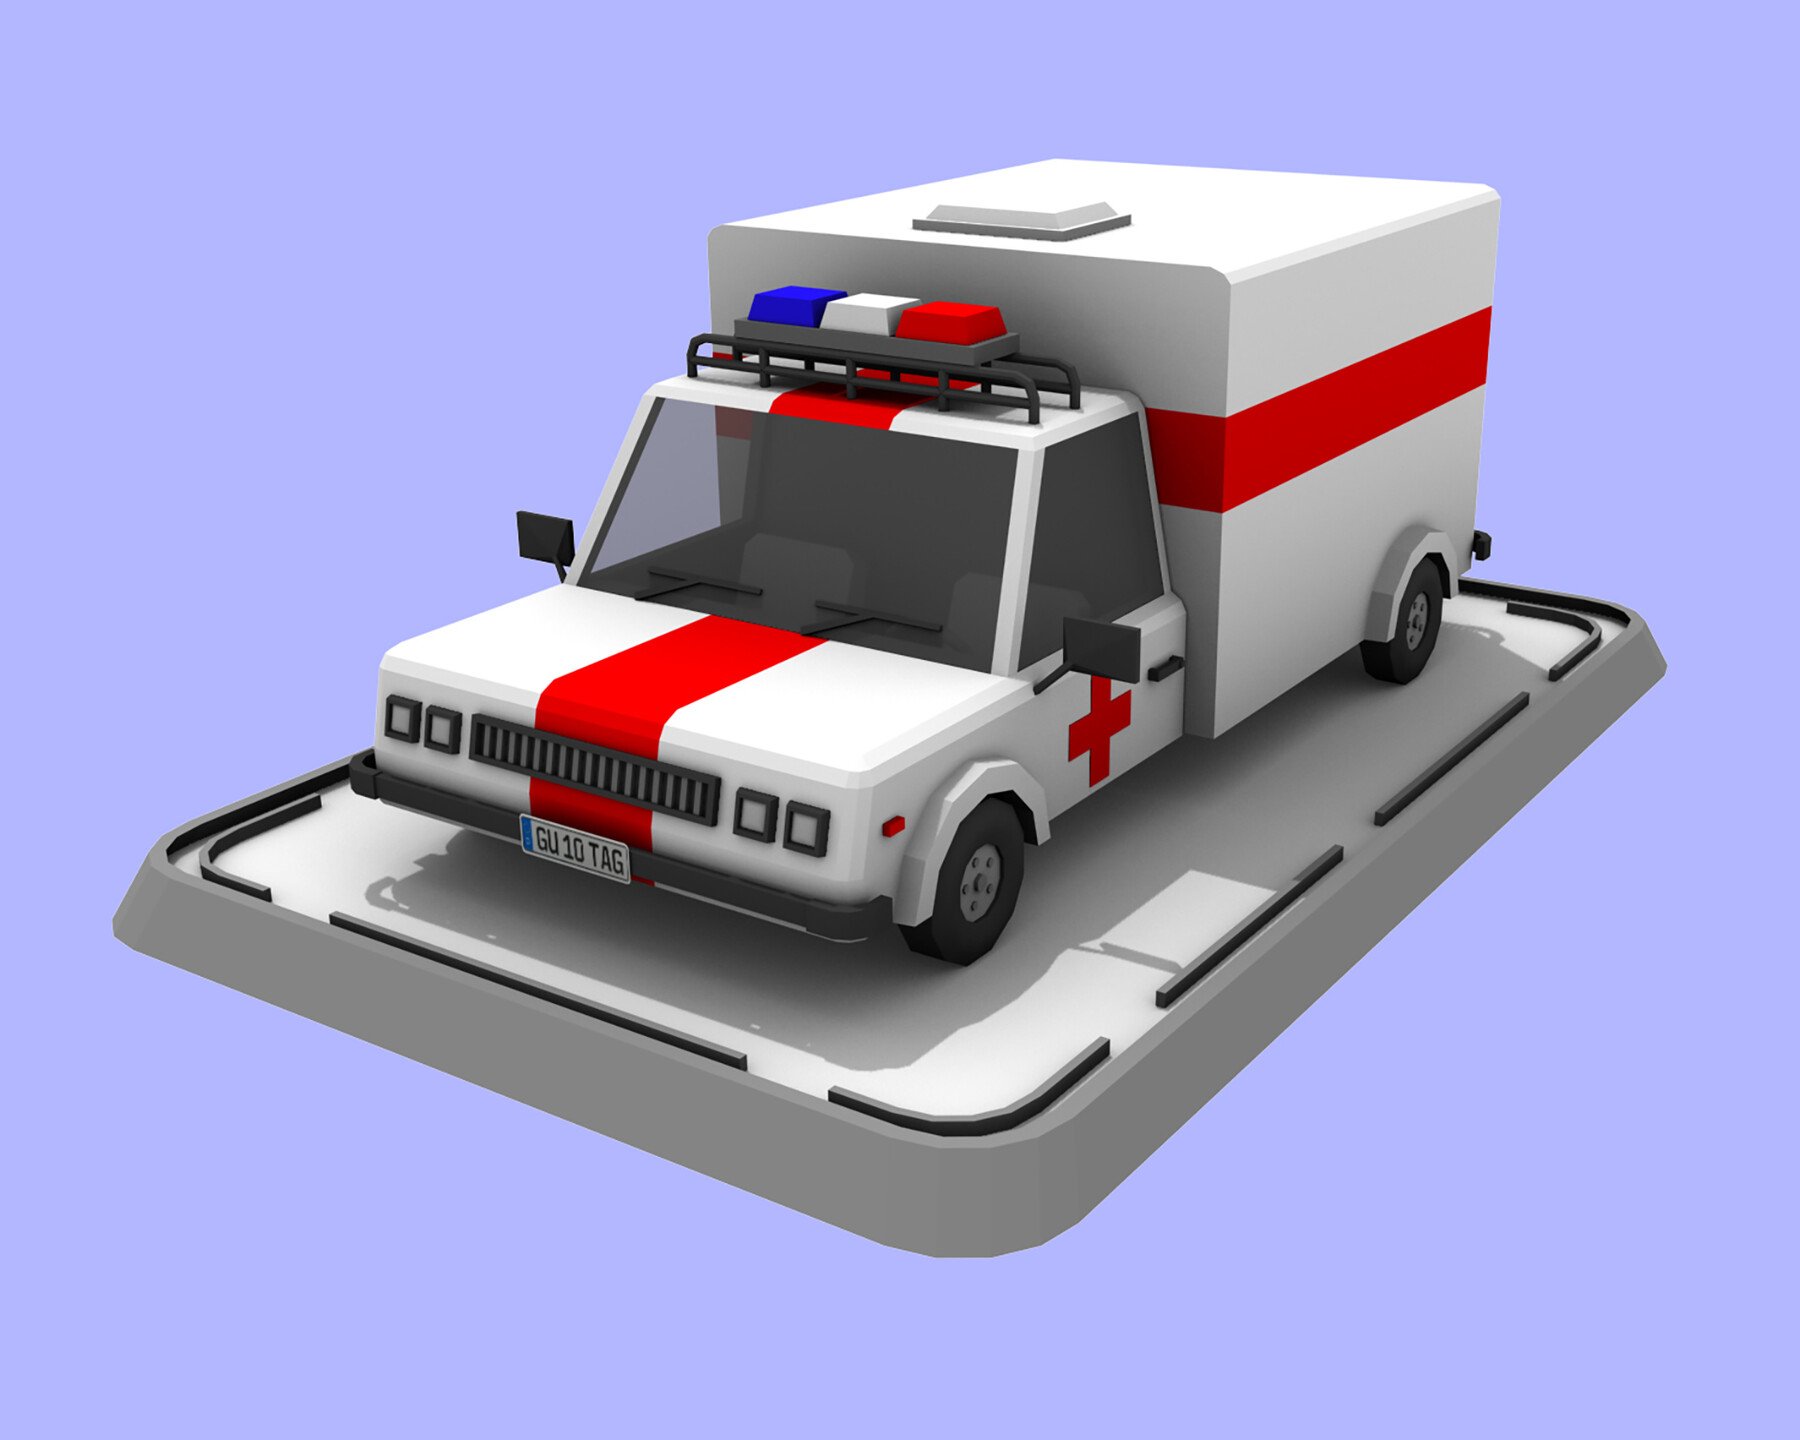 ArtStation - Cartoon Low Poly Ambulance Car | Resources